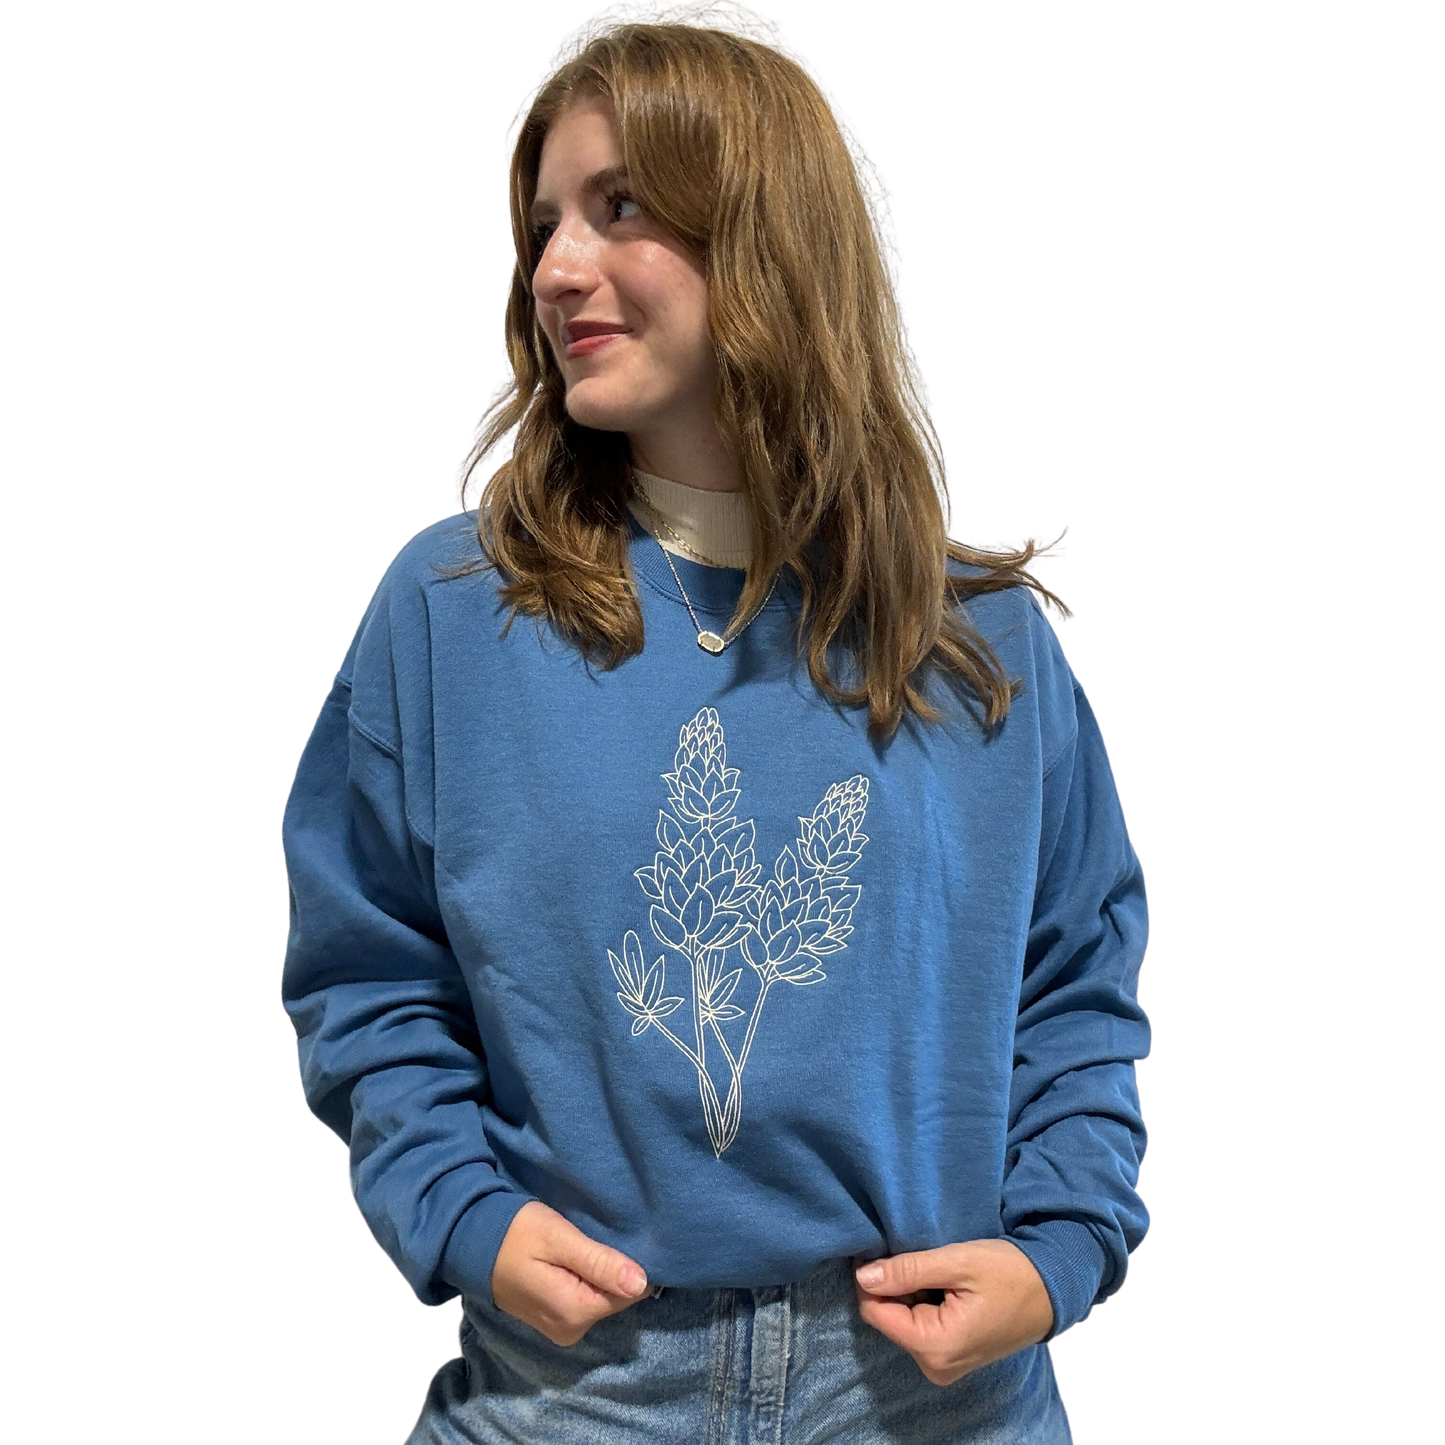 Bluebonnet Embroidered Crewneck Sweatshirt